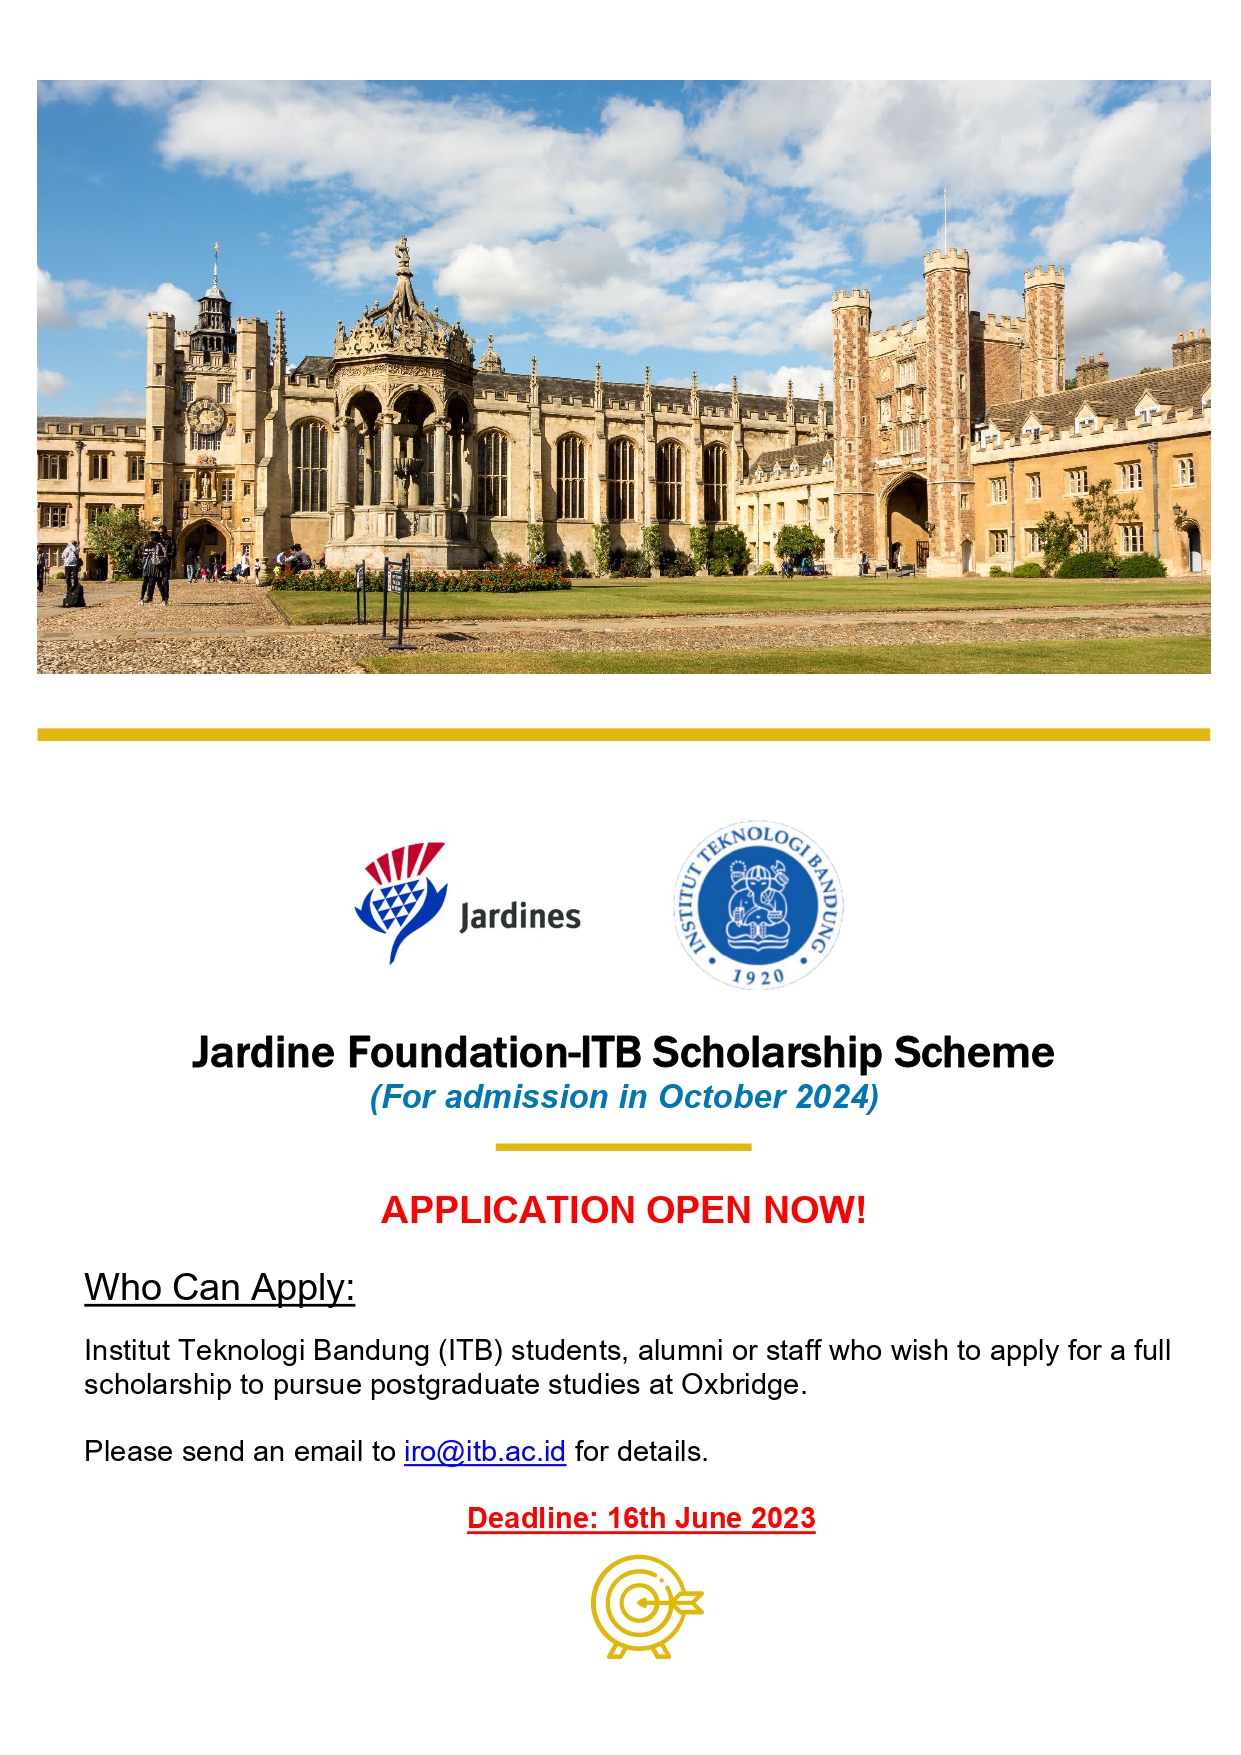 The Jardine Foundation Scholarships for Postgraduate